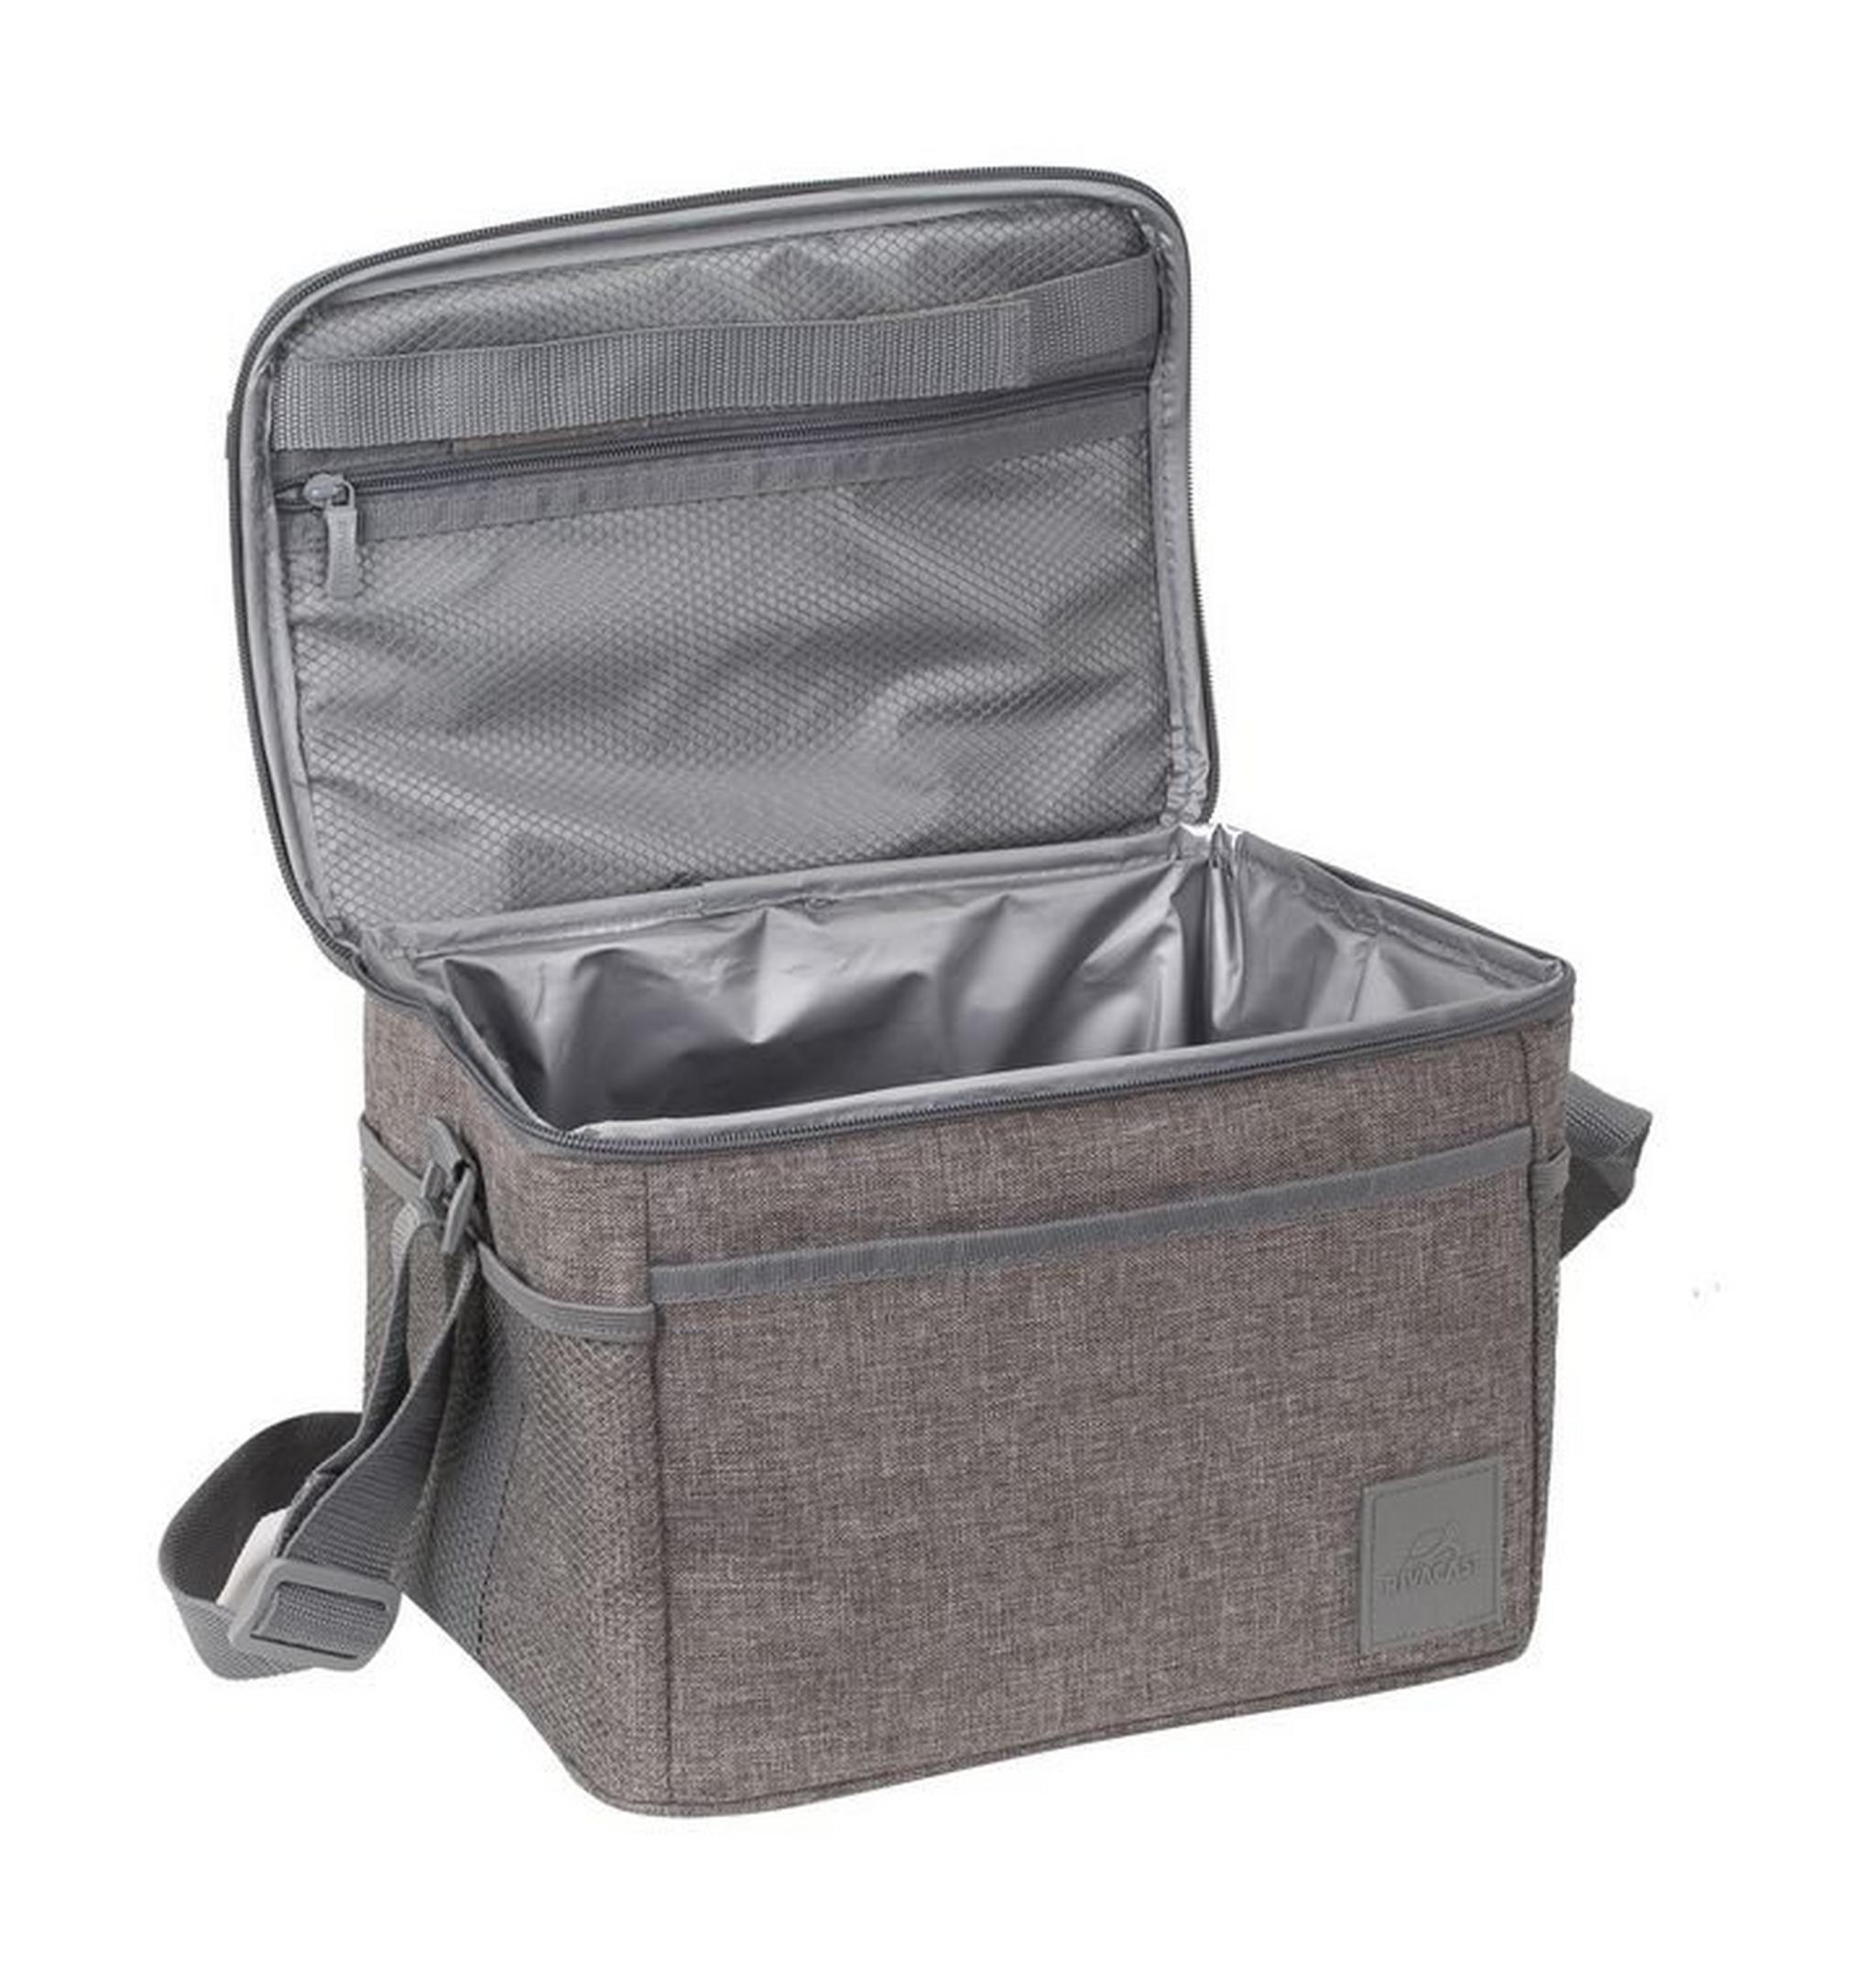 RivaCase 11L Cooler Bag (5712) - Grey